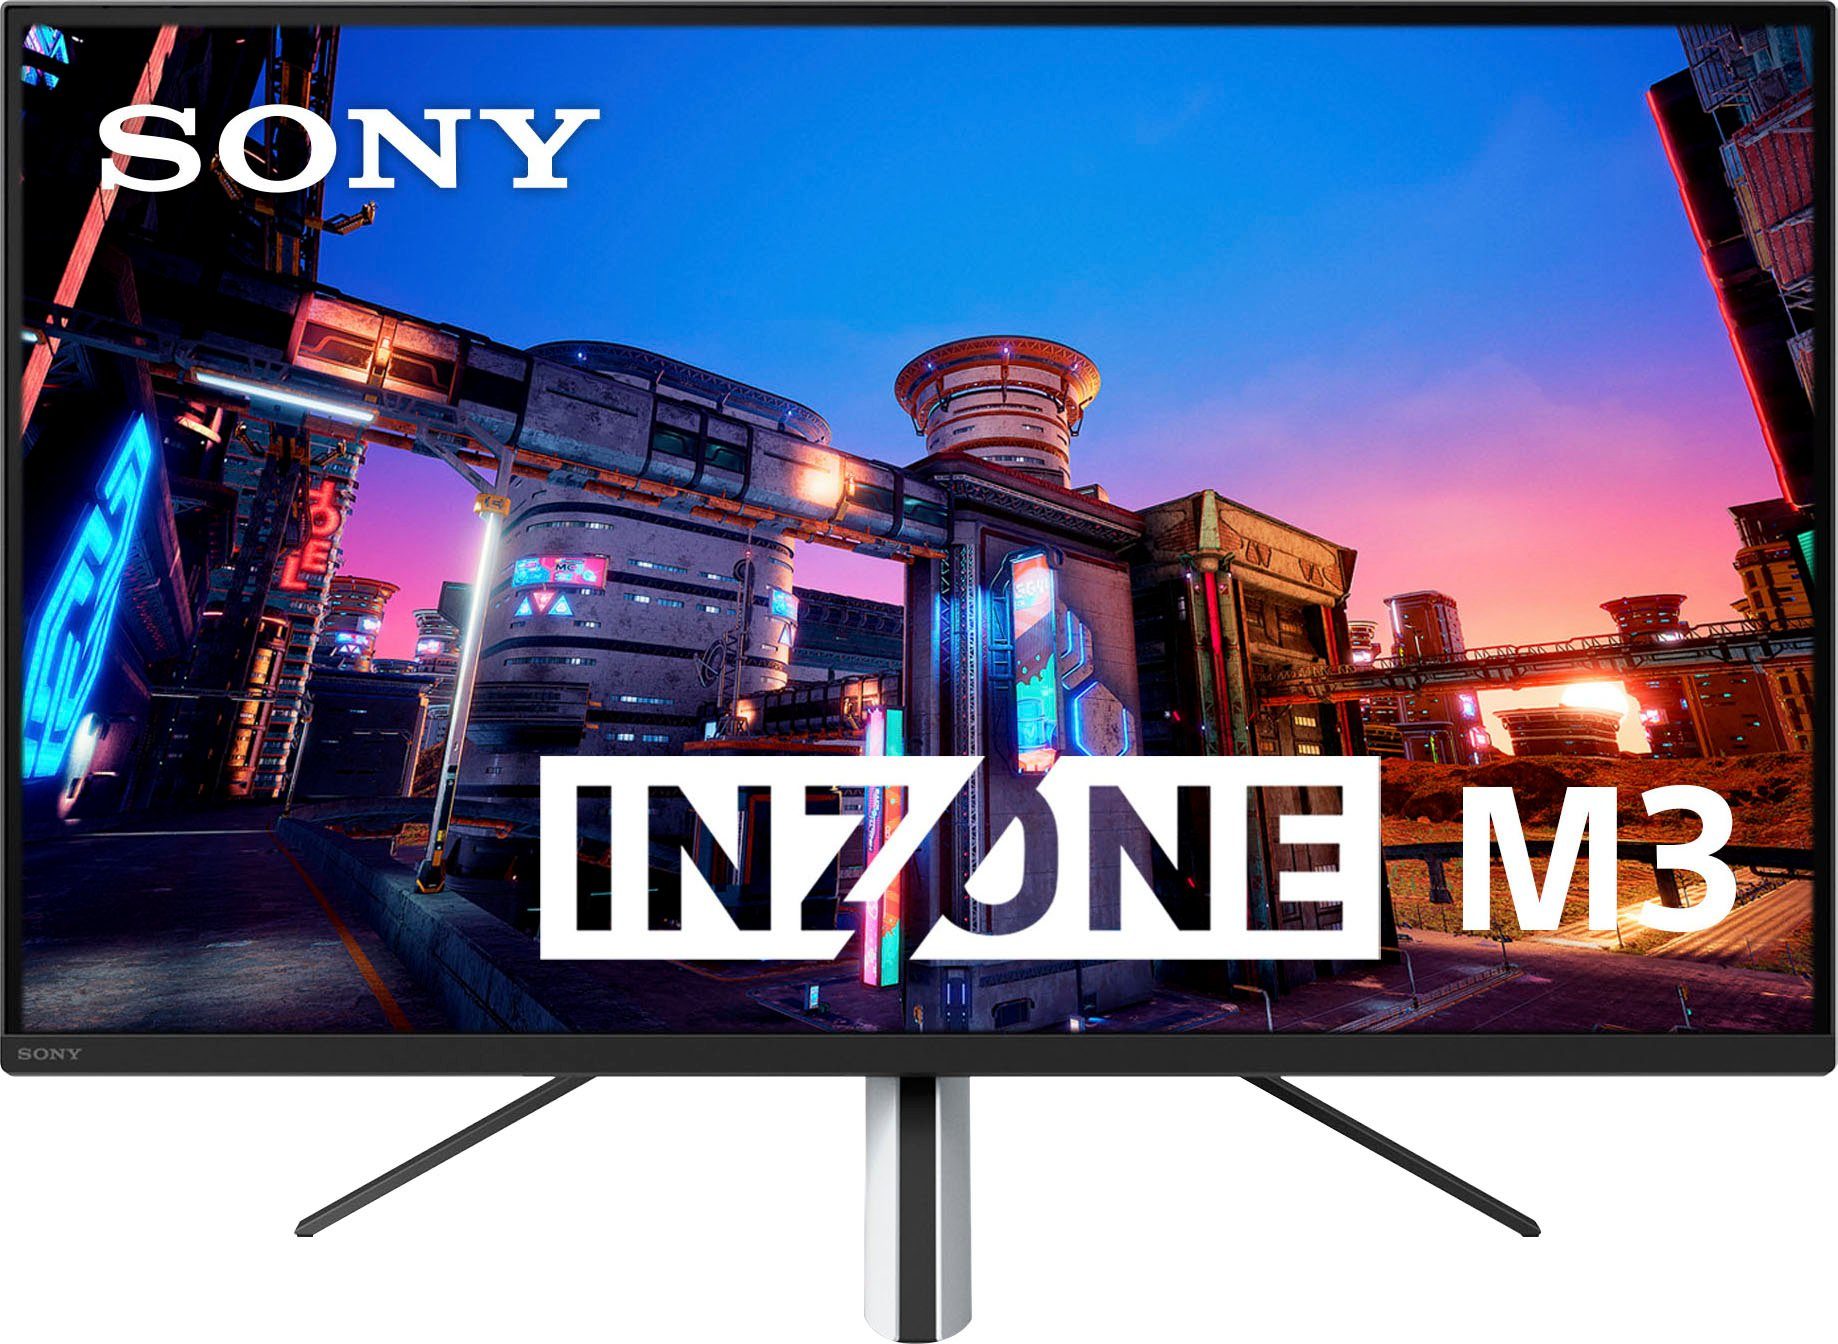 Sony INZONE Full cm/27 Reaktionszeit, px, 1920 IPS-LCD, 1080 Perfekt 240 M3 HD, Gaming-Monitor für (69 ", Hz, ms 1 PlayStation®5) x